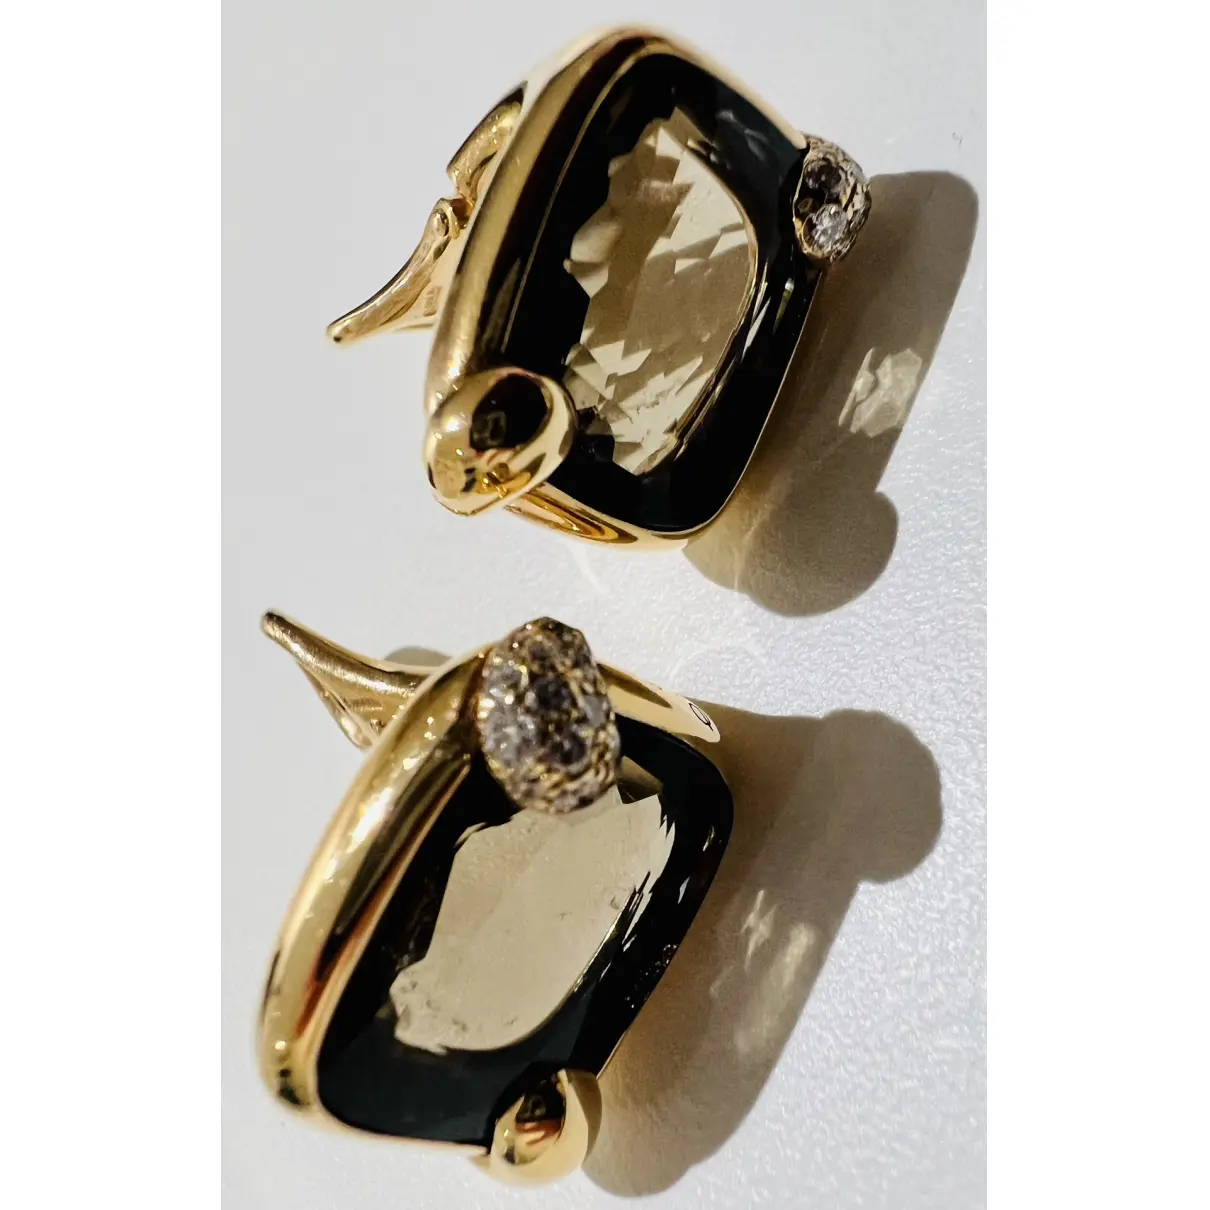 Buy Pomellato Ritratto yellow gold earrings online